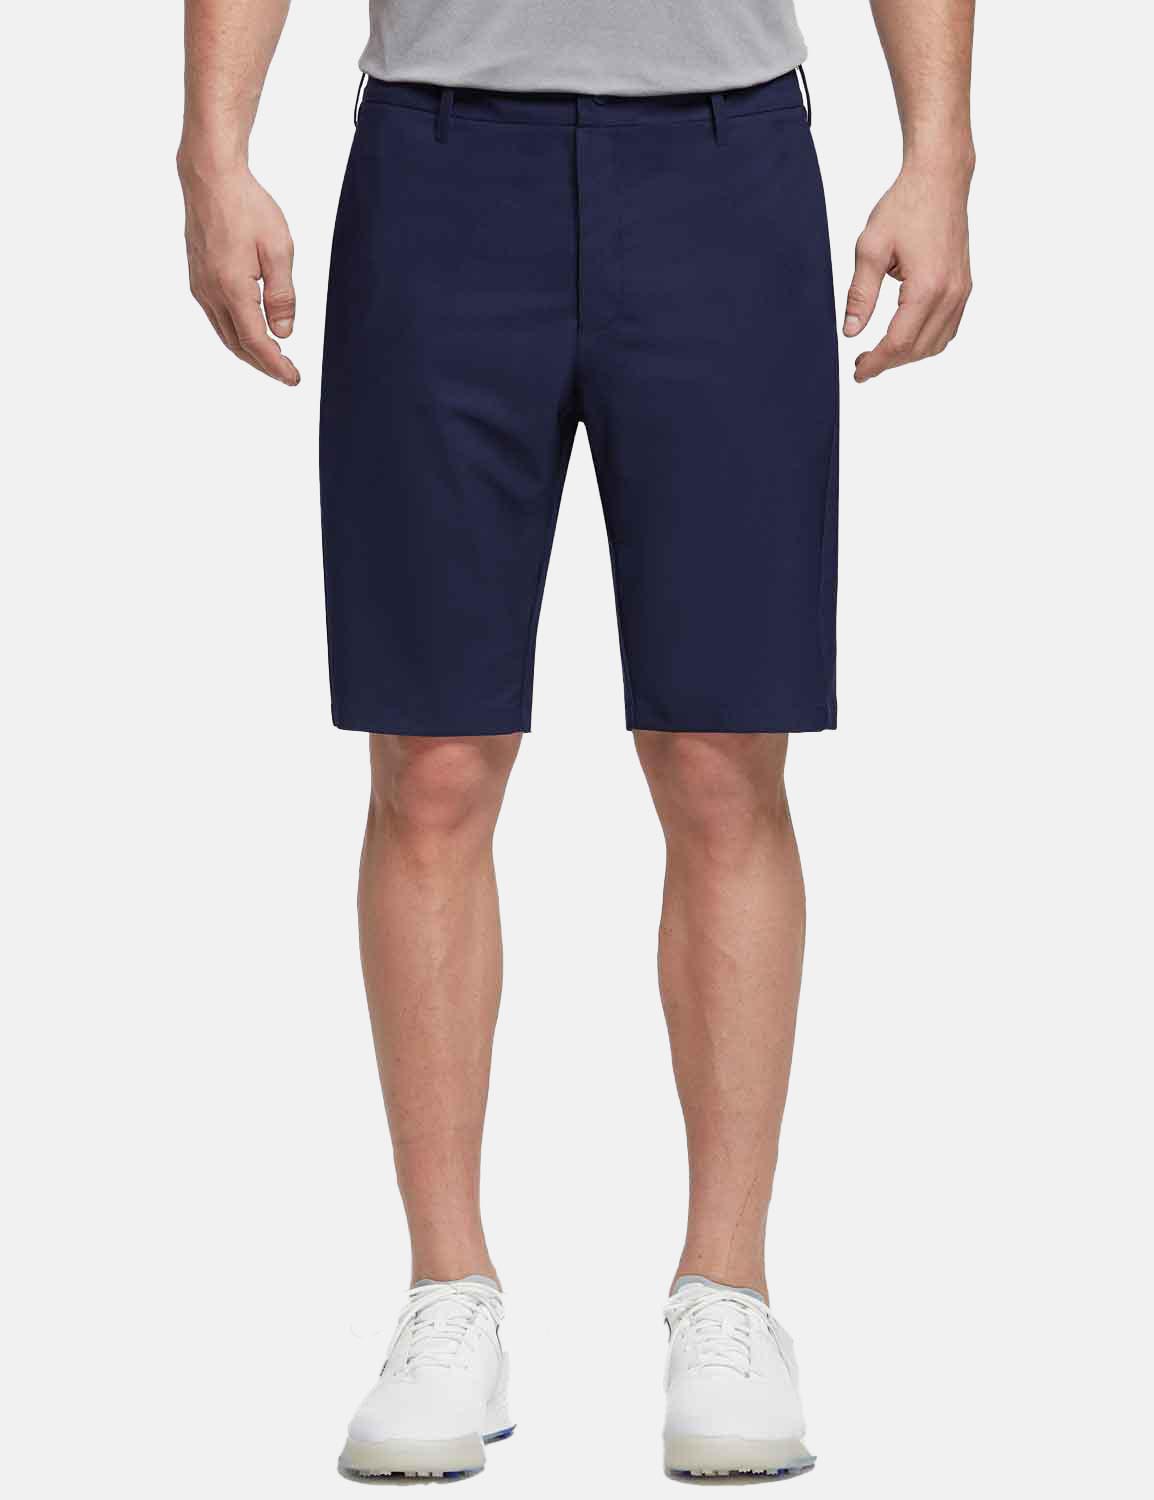 Baleaf Men's 10' UPF 50+ Lightweight Golf Shorts w Zipper Pockets cga005 Medieval Blue Front